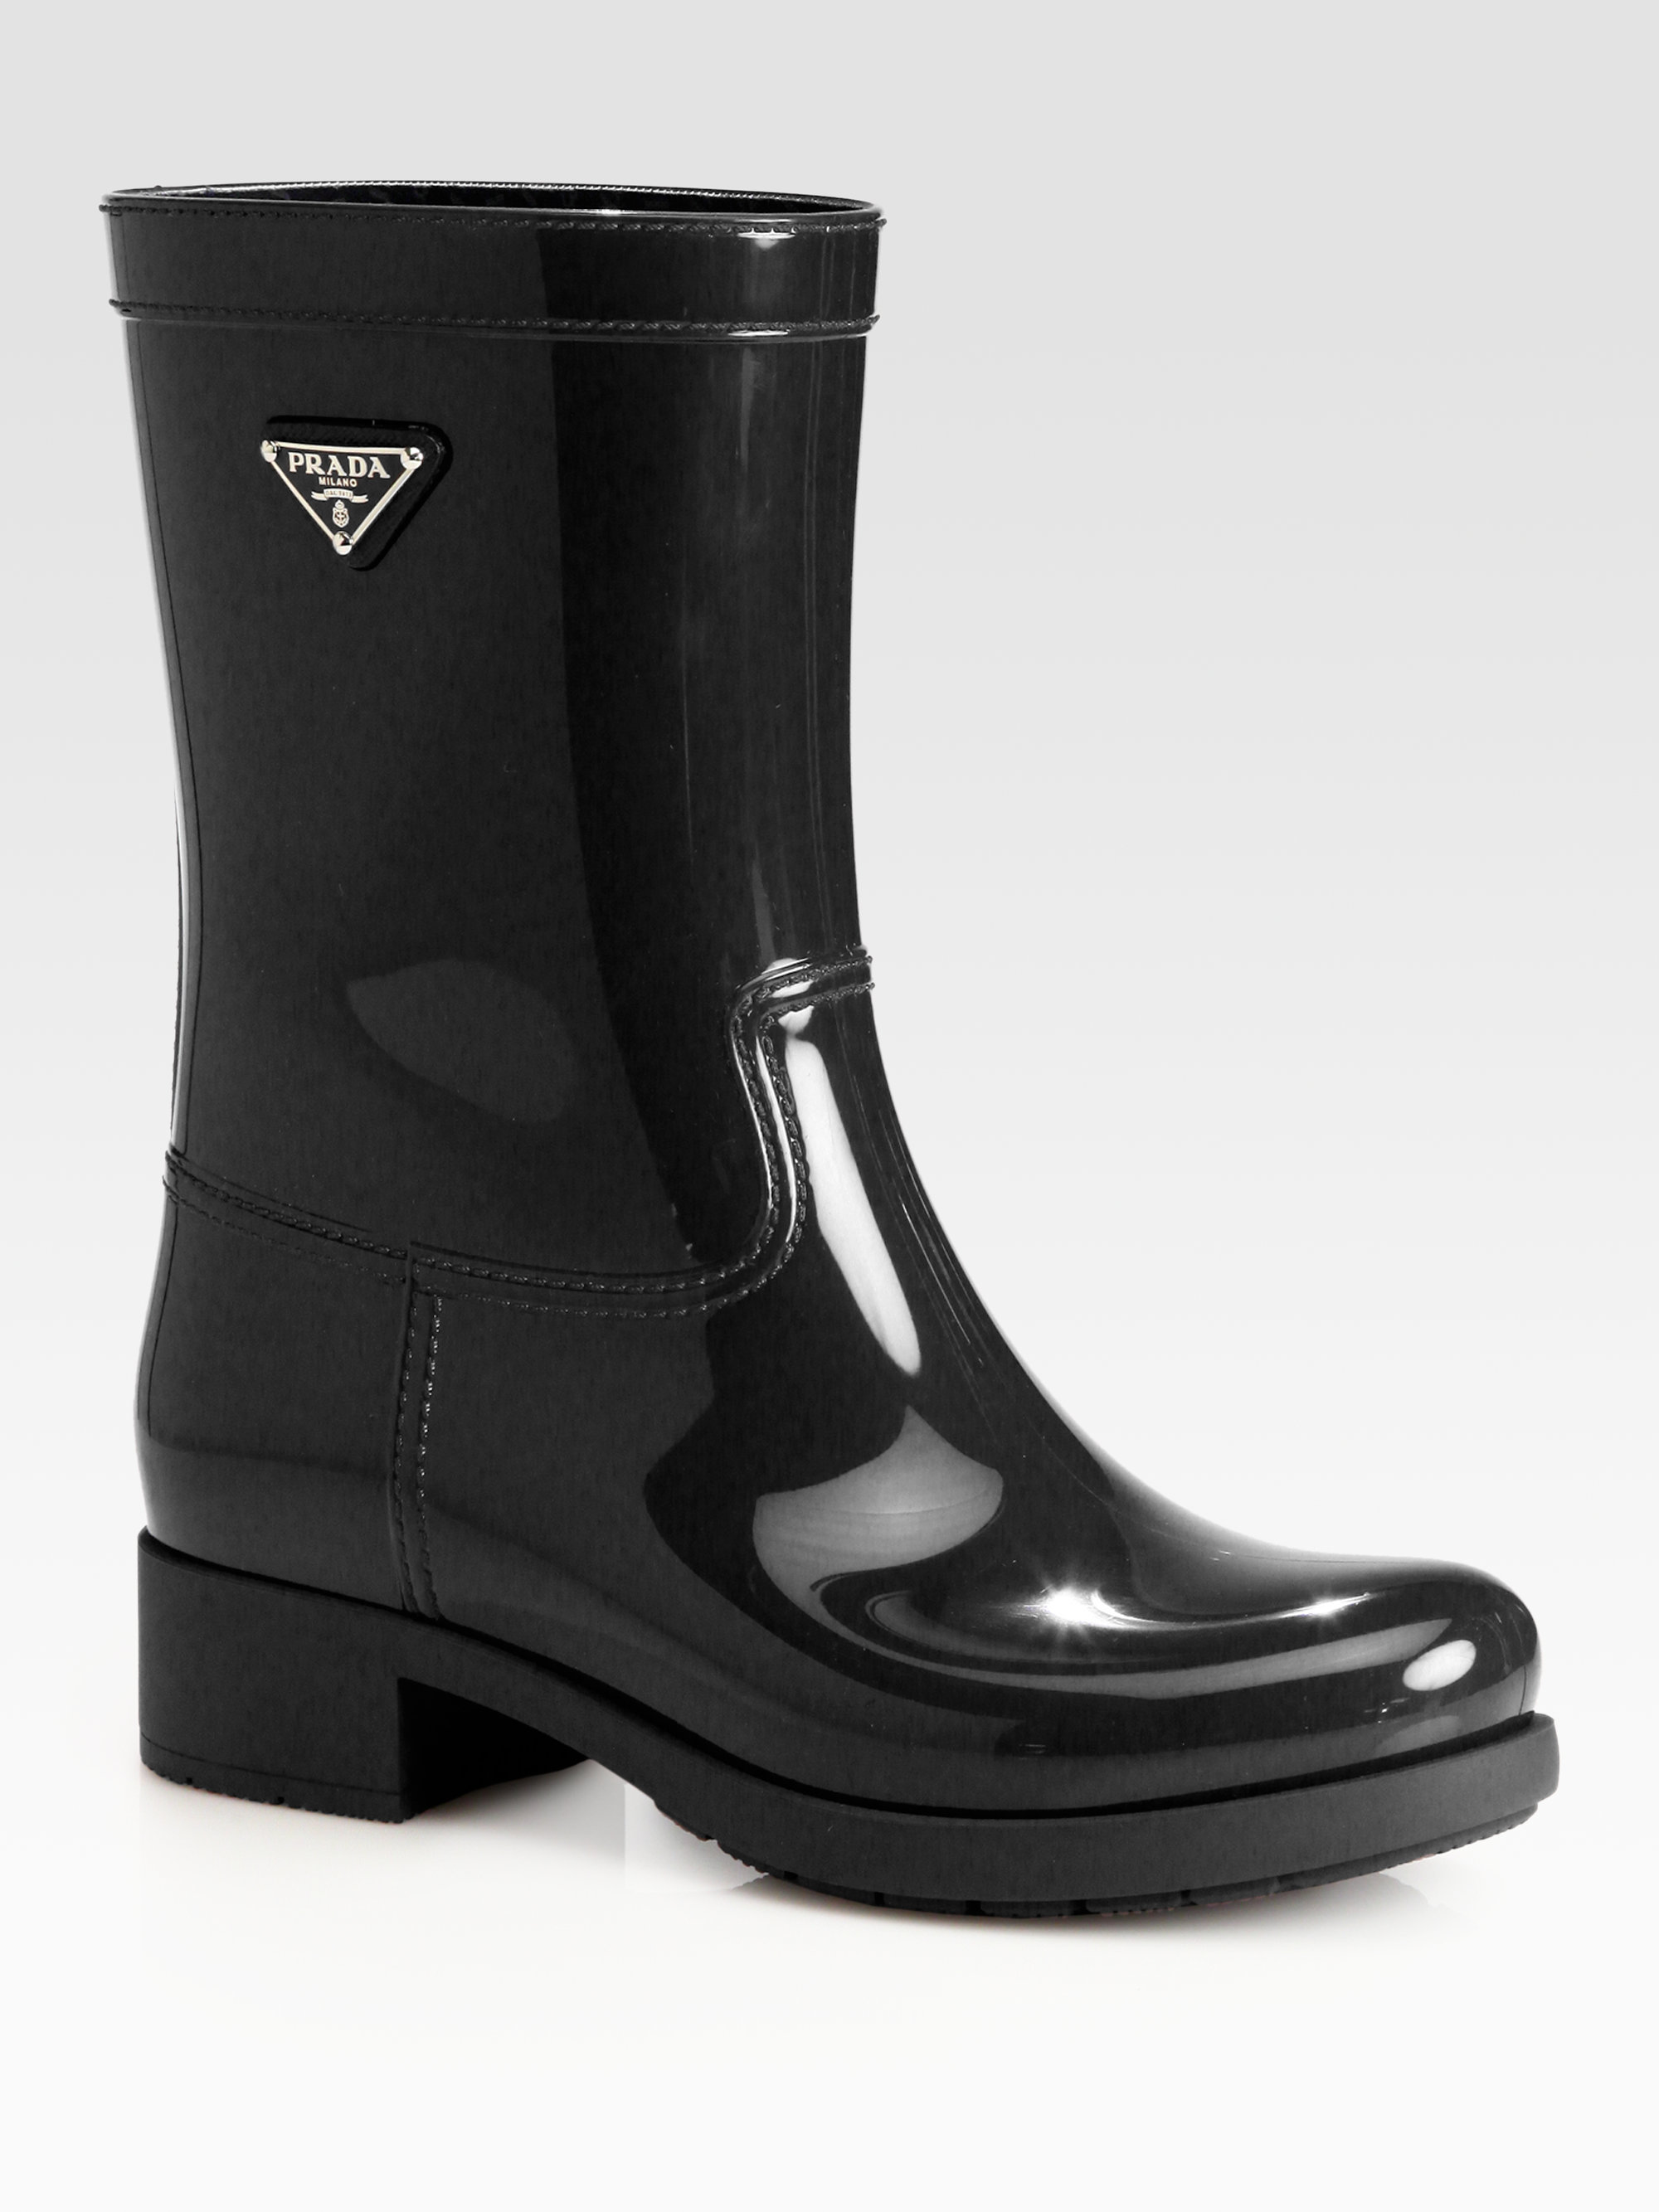 Prada Short Logo Rain Boots in Nero 